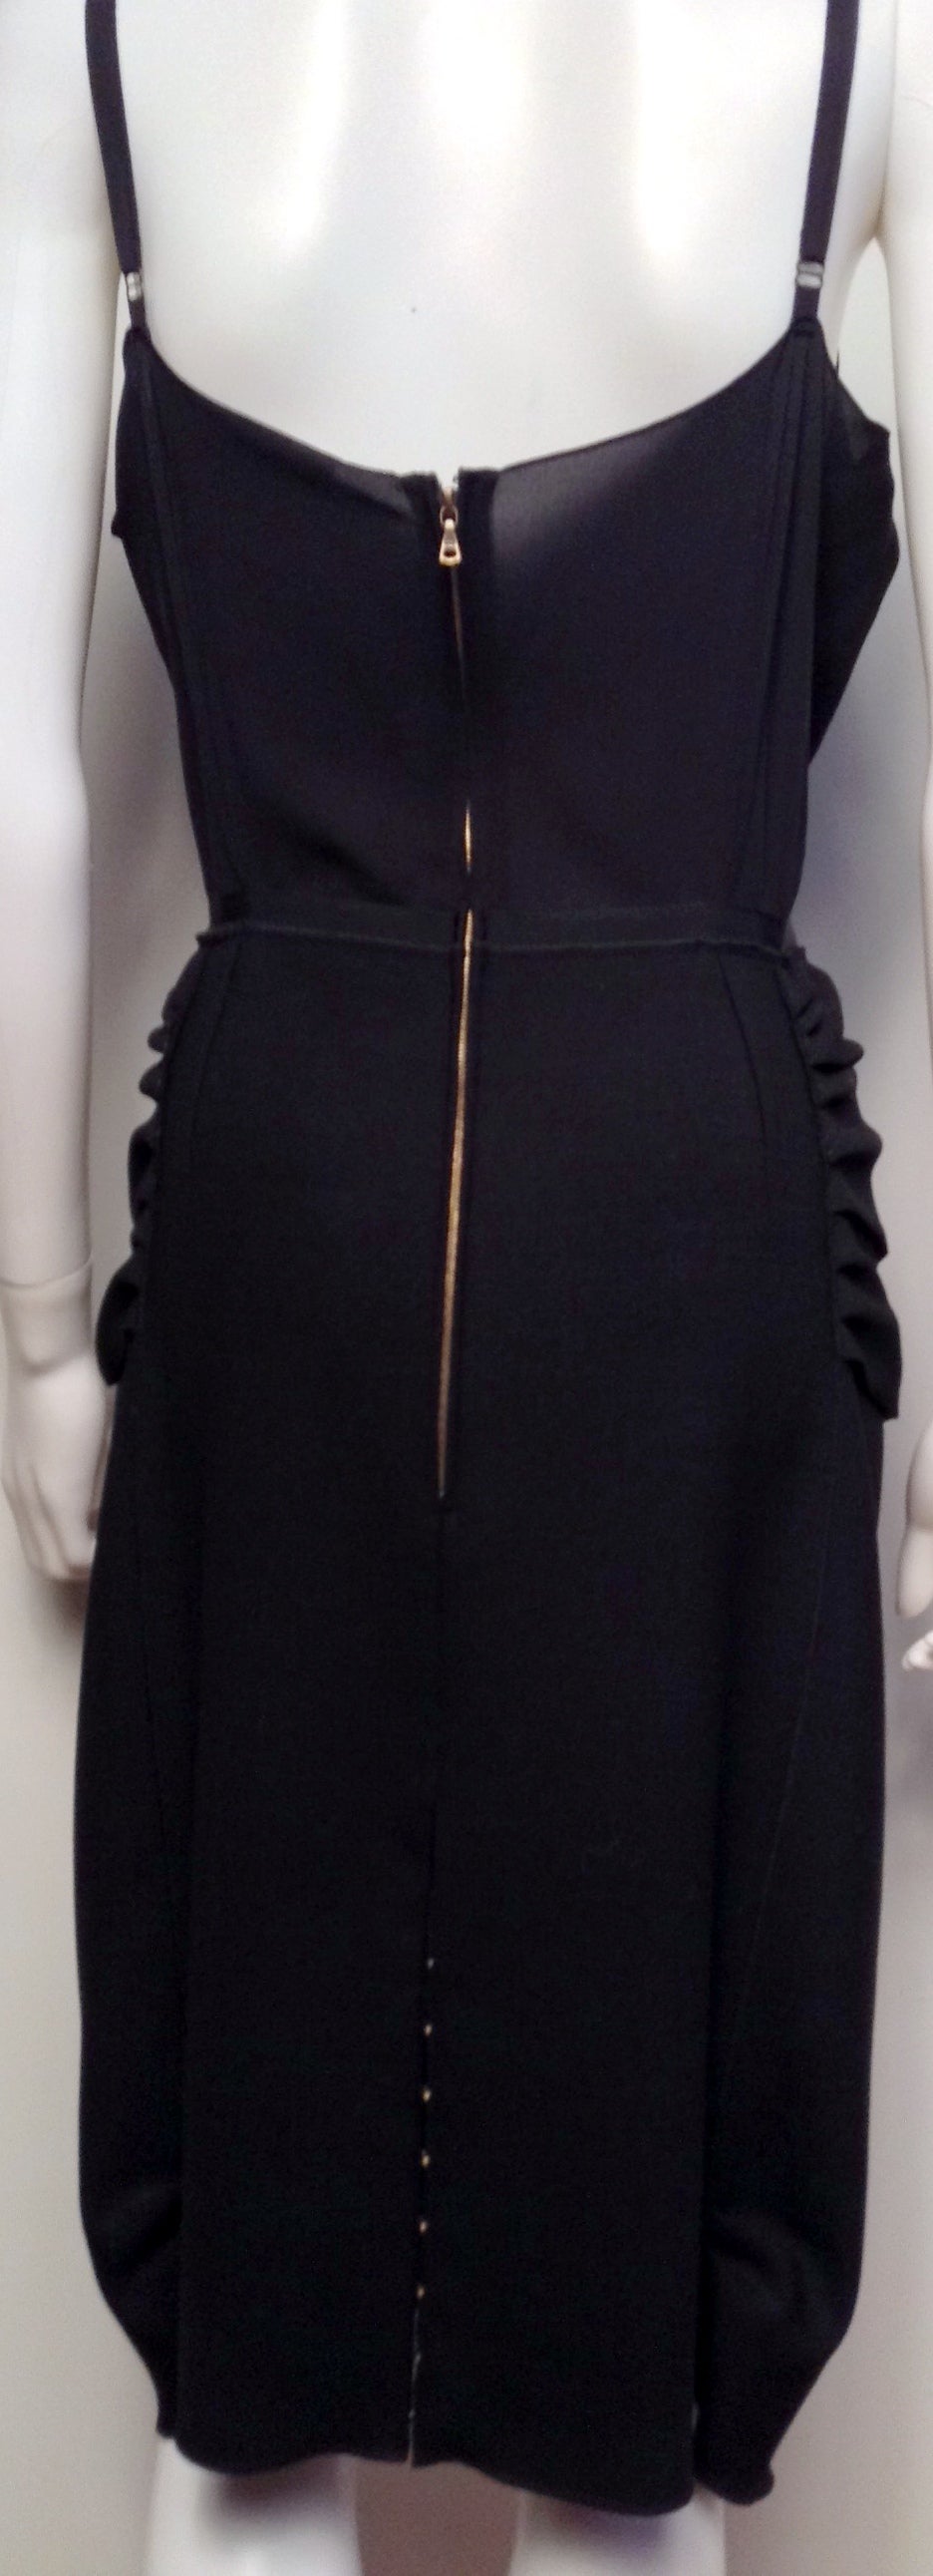 Nina Ricci Black Cocktail Dress Size 42/10 2012 For Sale 4